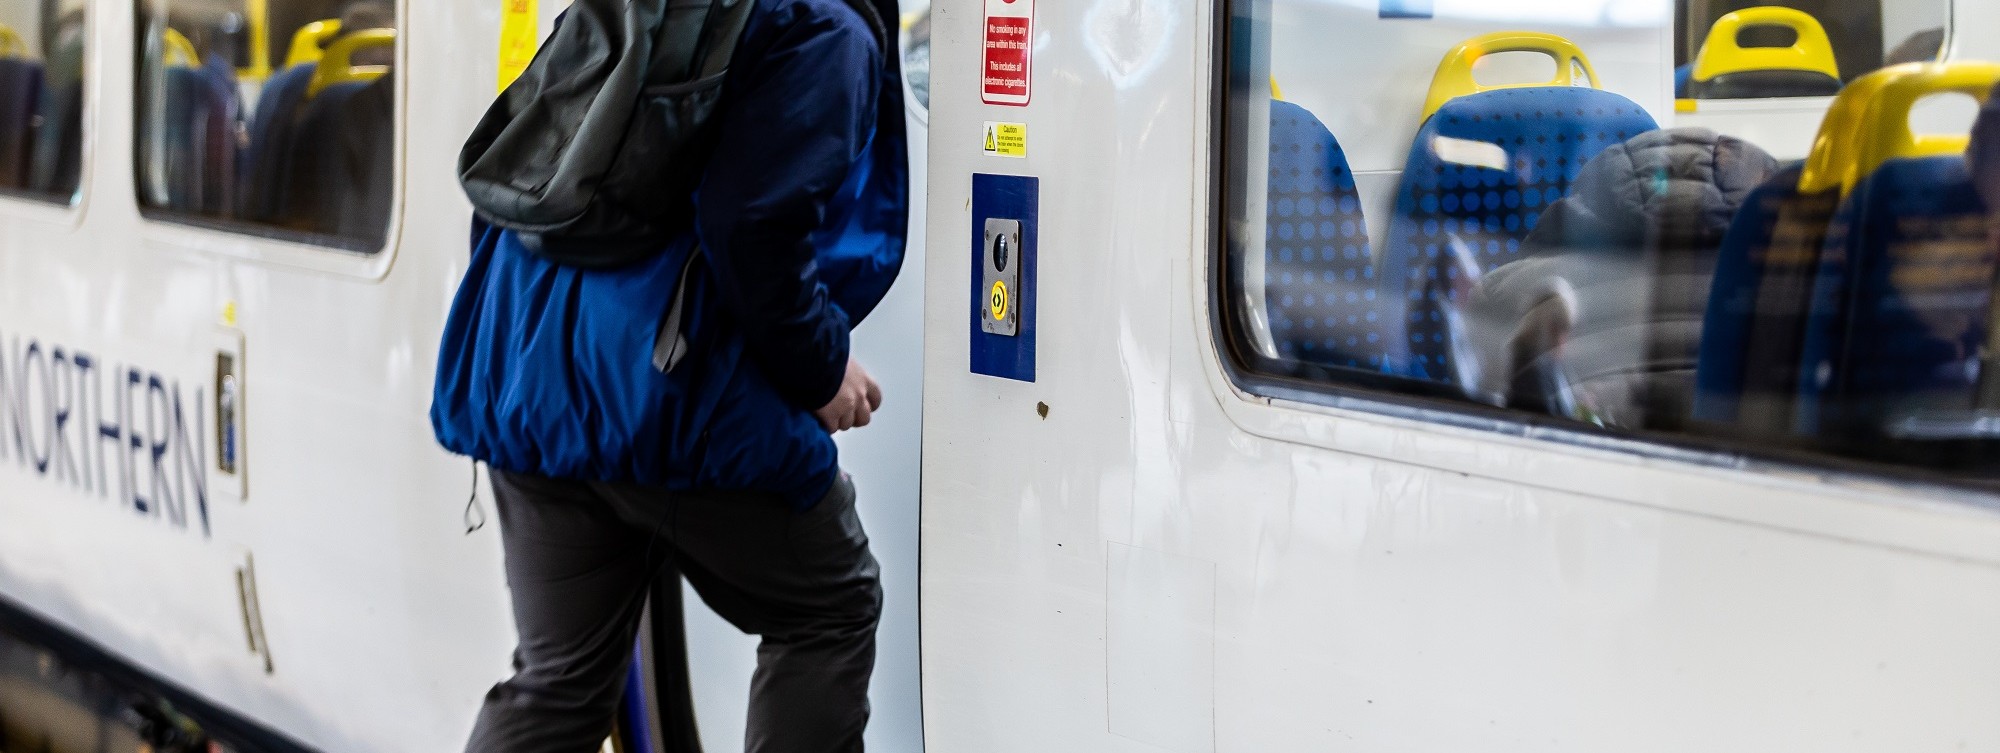 image-shows-customer-boarding-a-train